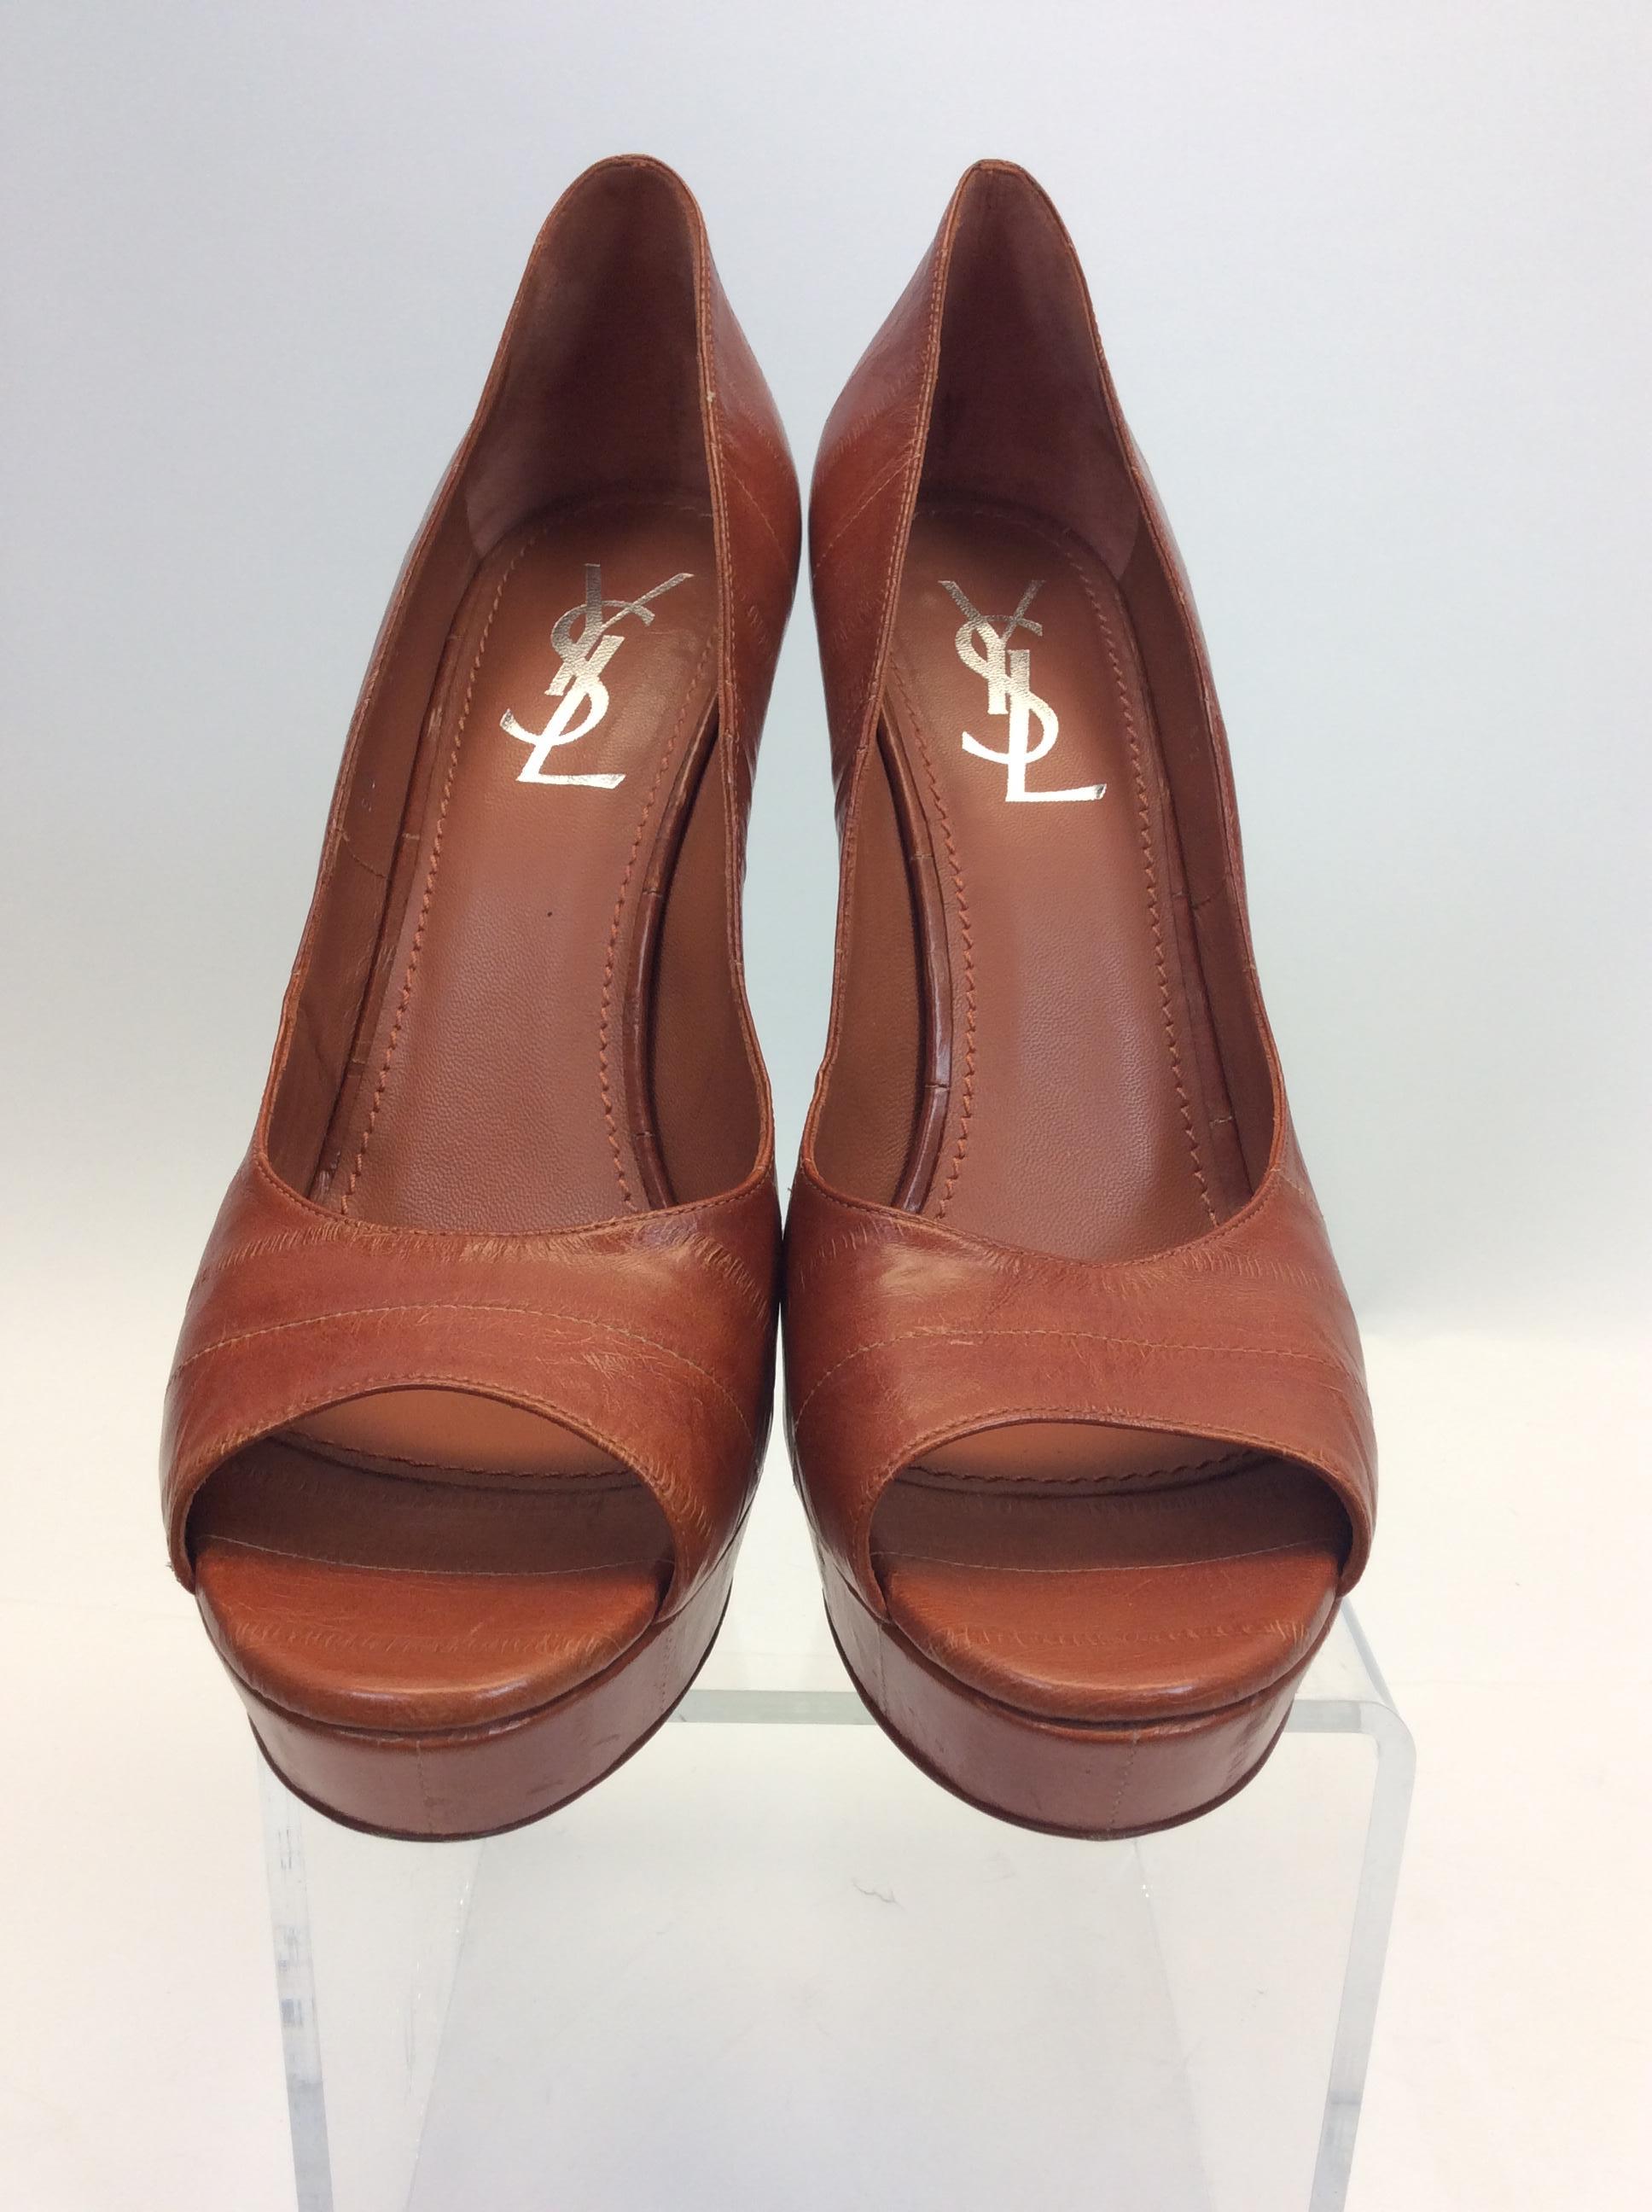 Yves Saint Laurent Rust Orange Leather Peep Toe Pumps
$250
Made in Italy
Leather
Size 40
1” platform
5.75” heel